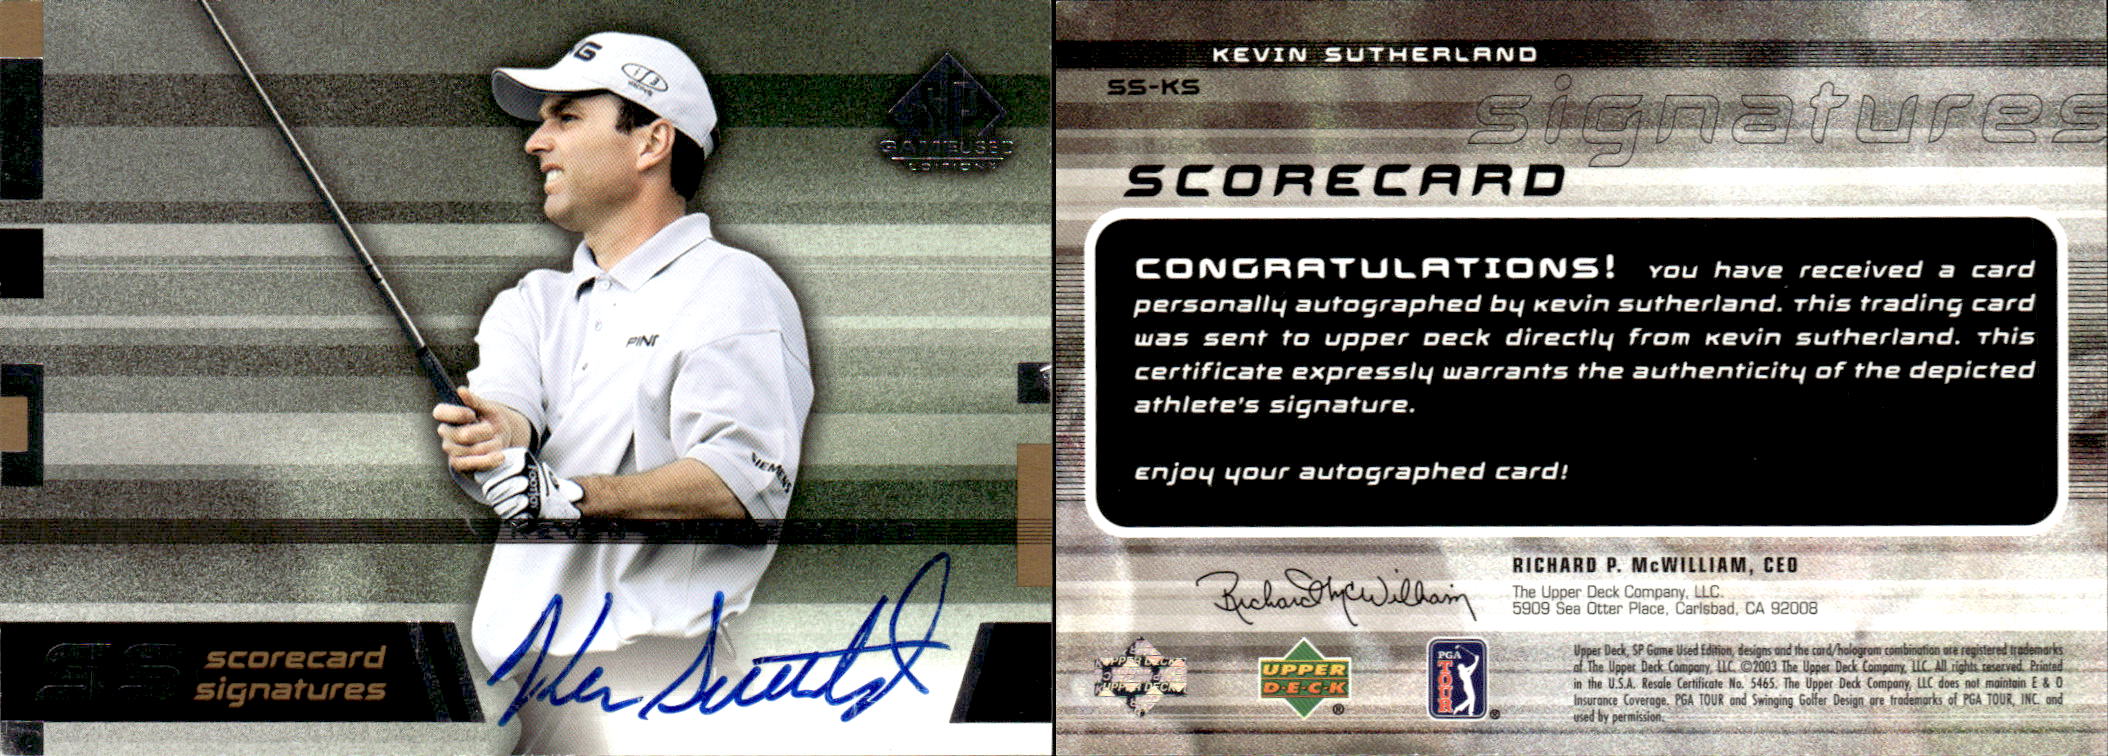 2003 SP Game Used Scorecard Signatures #KS Kevin Sutherland